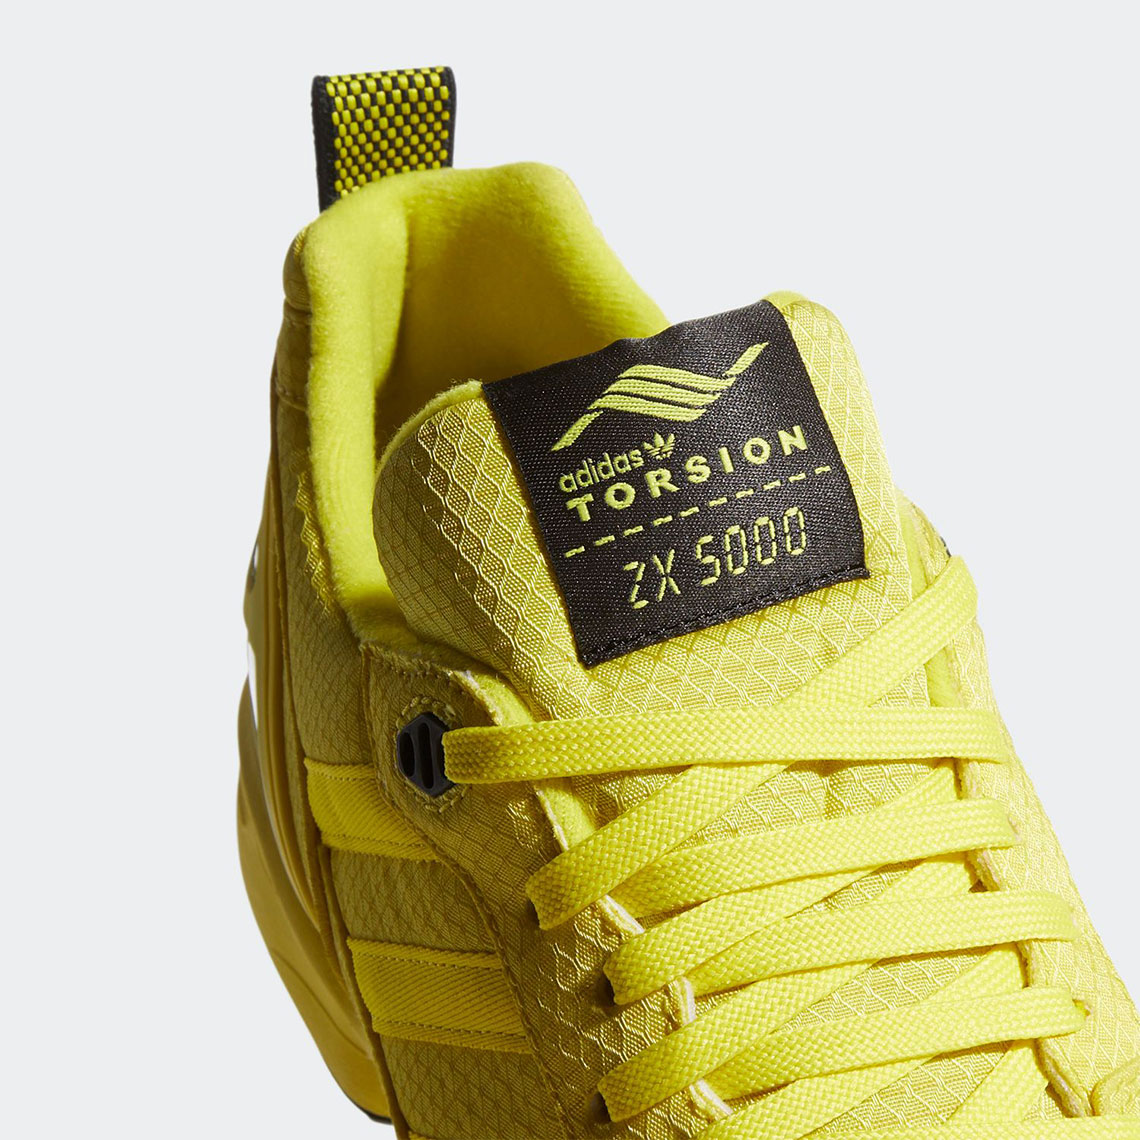 Adidas Zx5000 Bright Yellow Fz4645 1